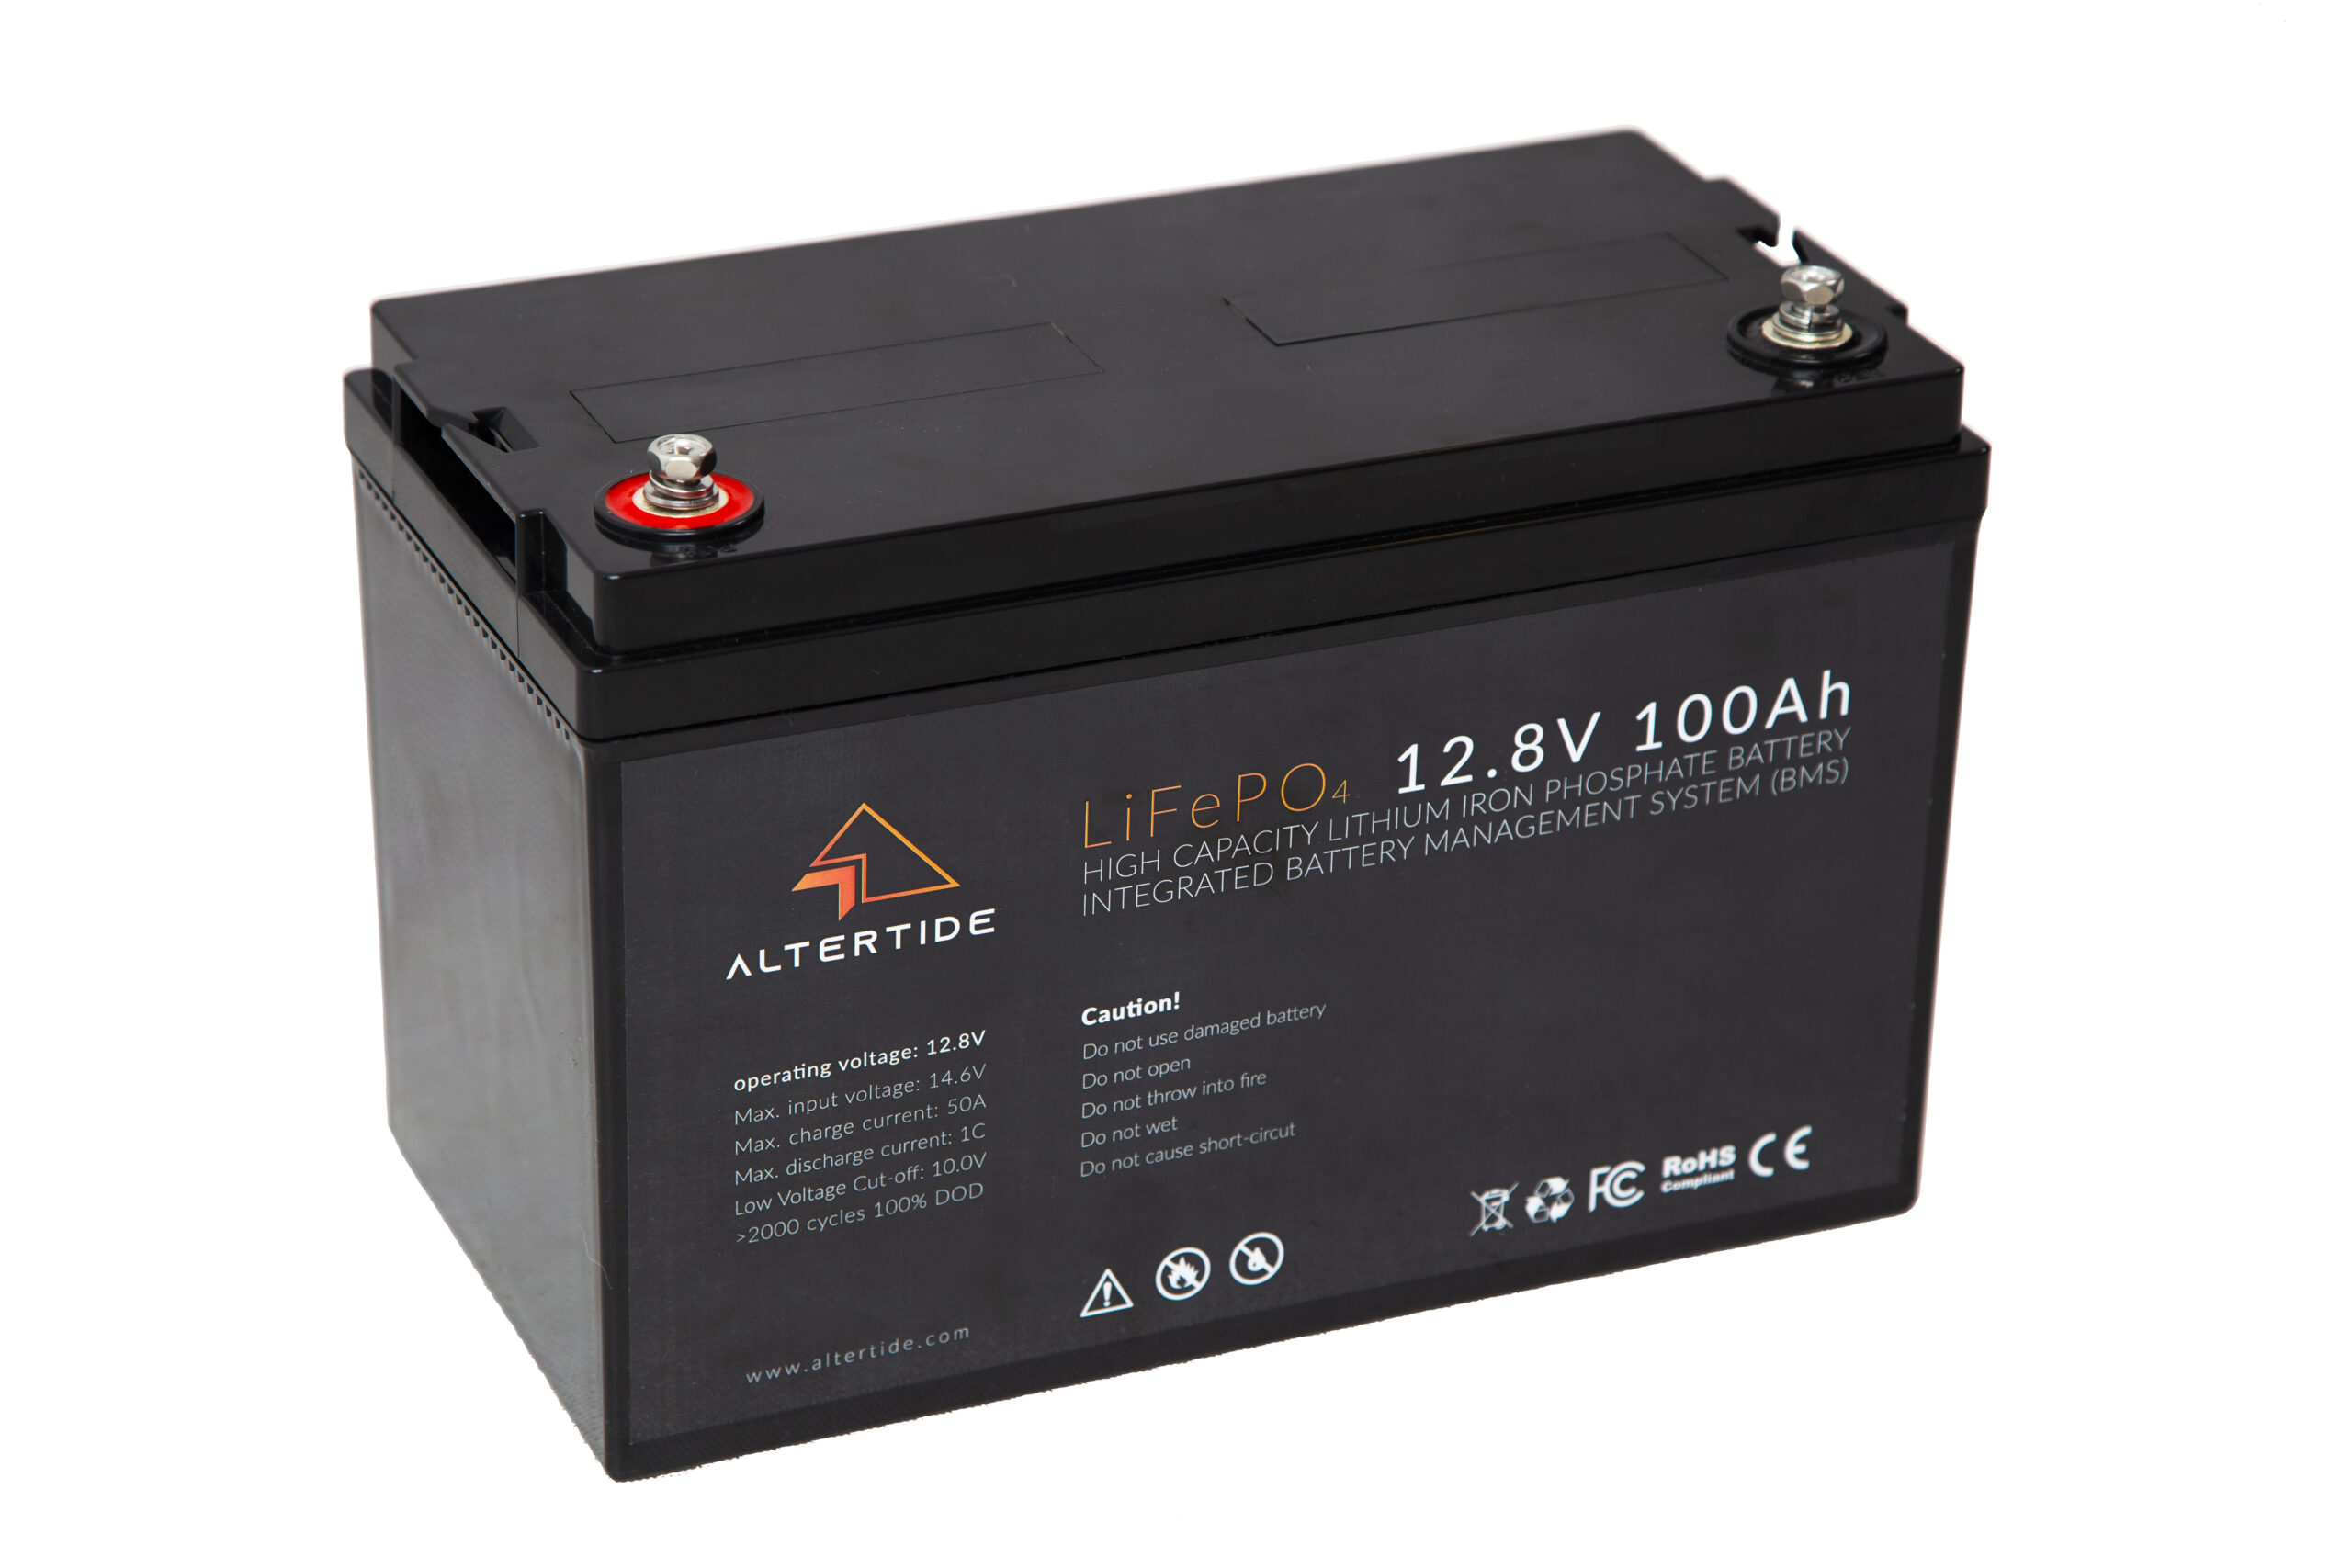 HQST 12 Volt 100Ah LiFePO4 Lithium Iron Phosphate Battery, Built